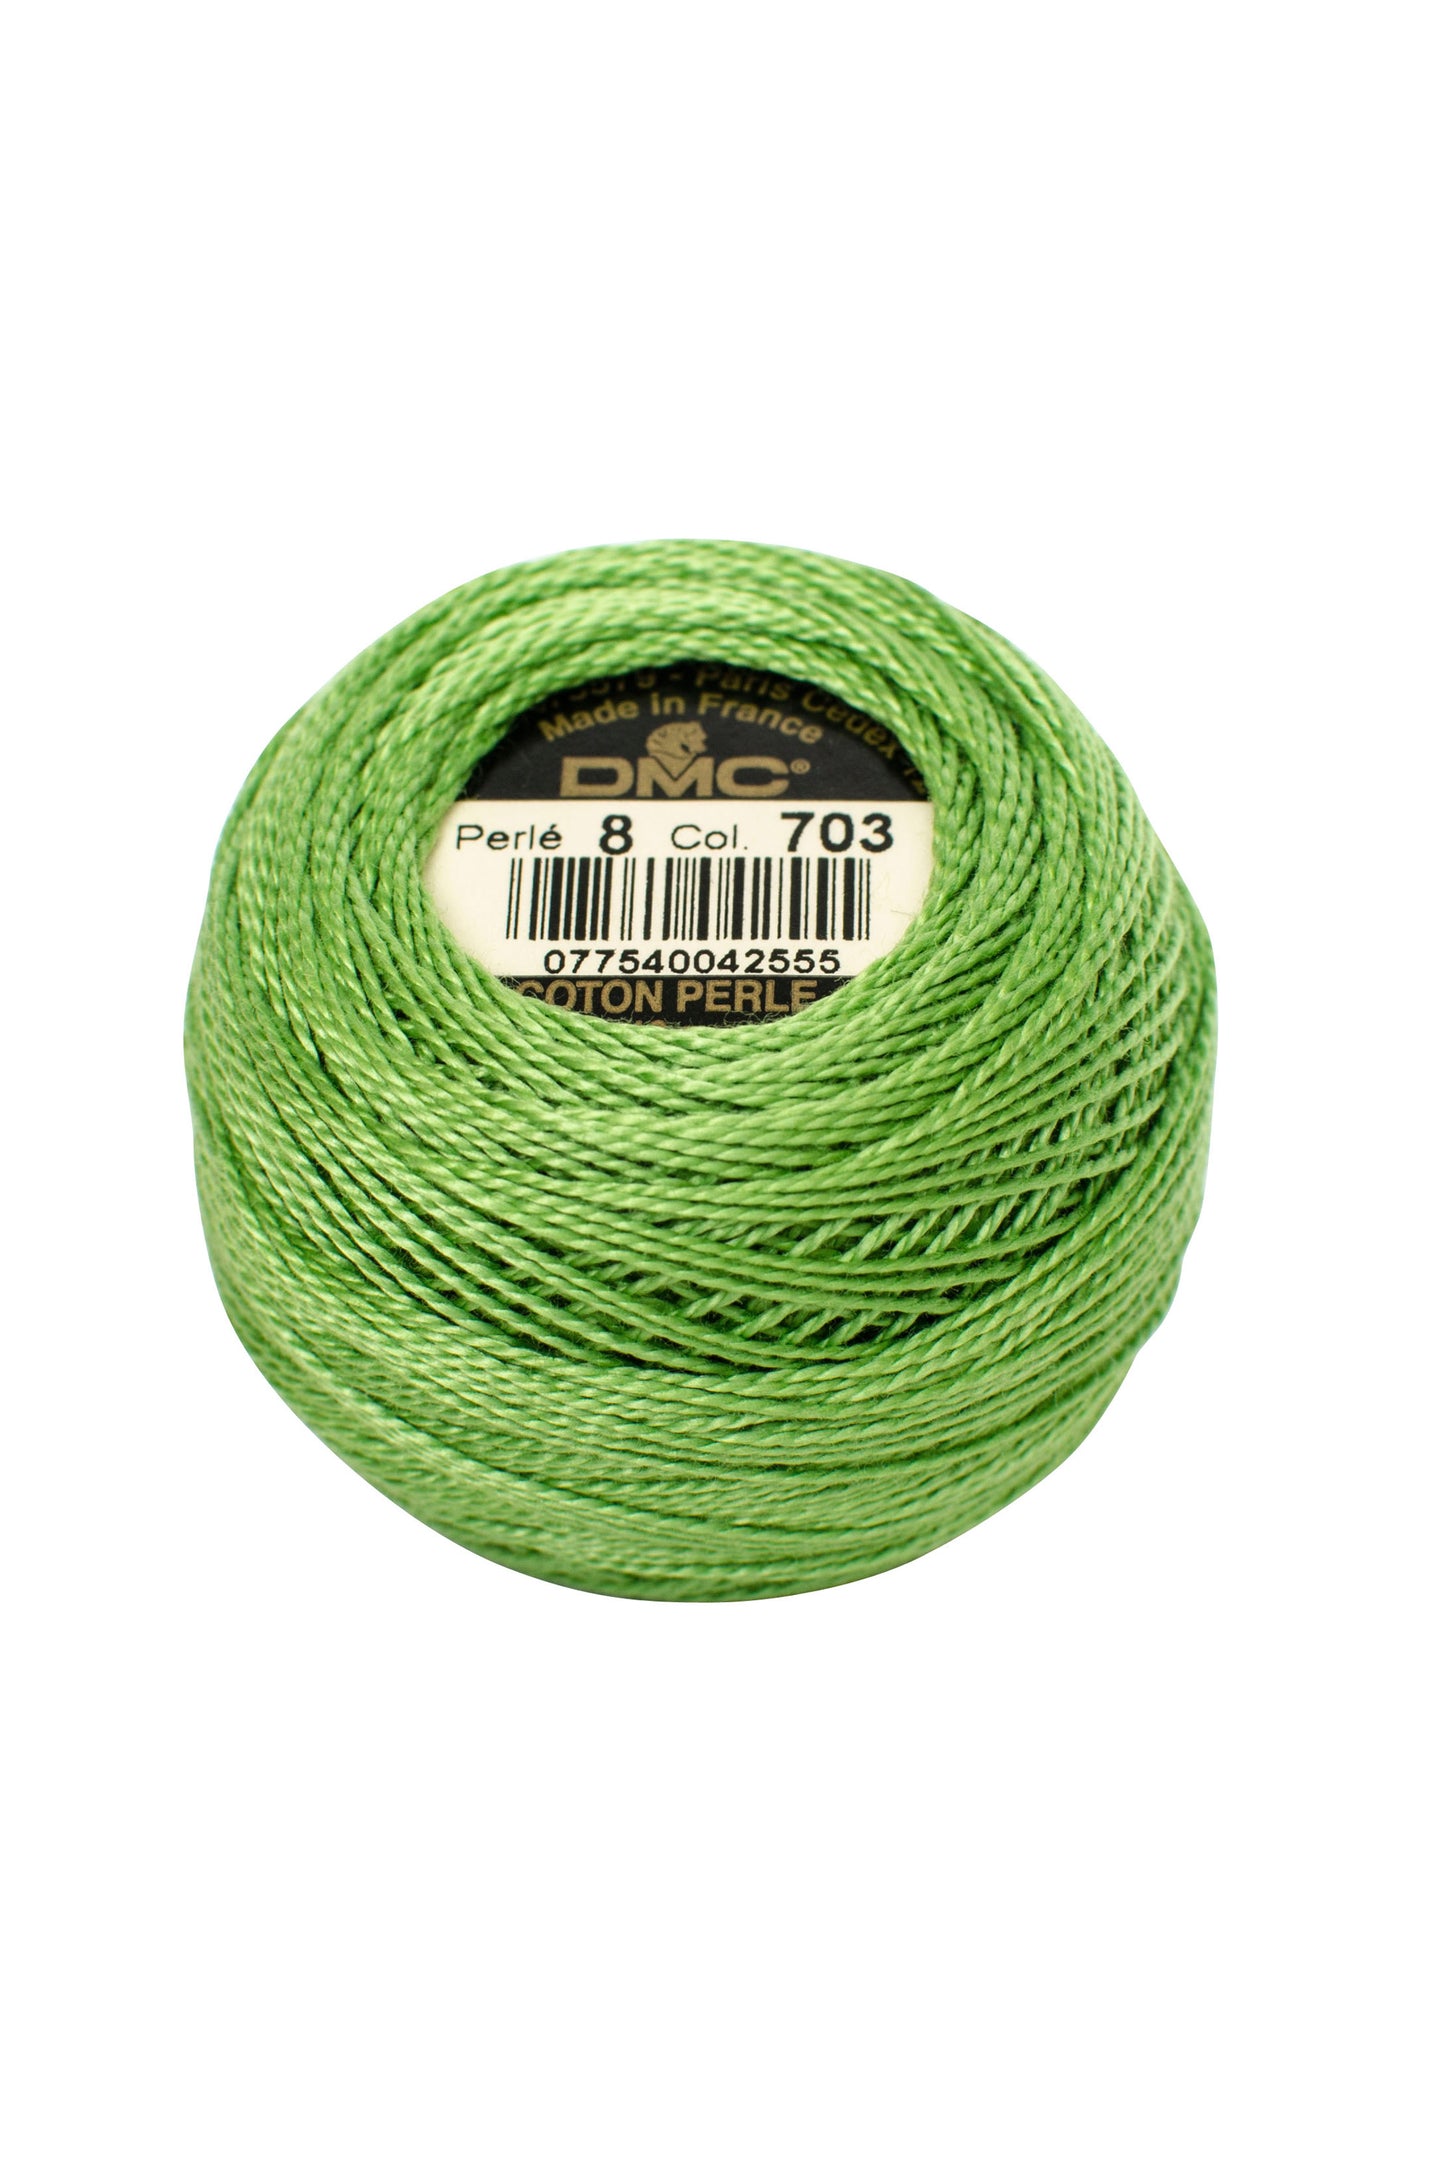 703 Chartreuse - DMC #8 Perle Cotton Ball